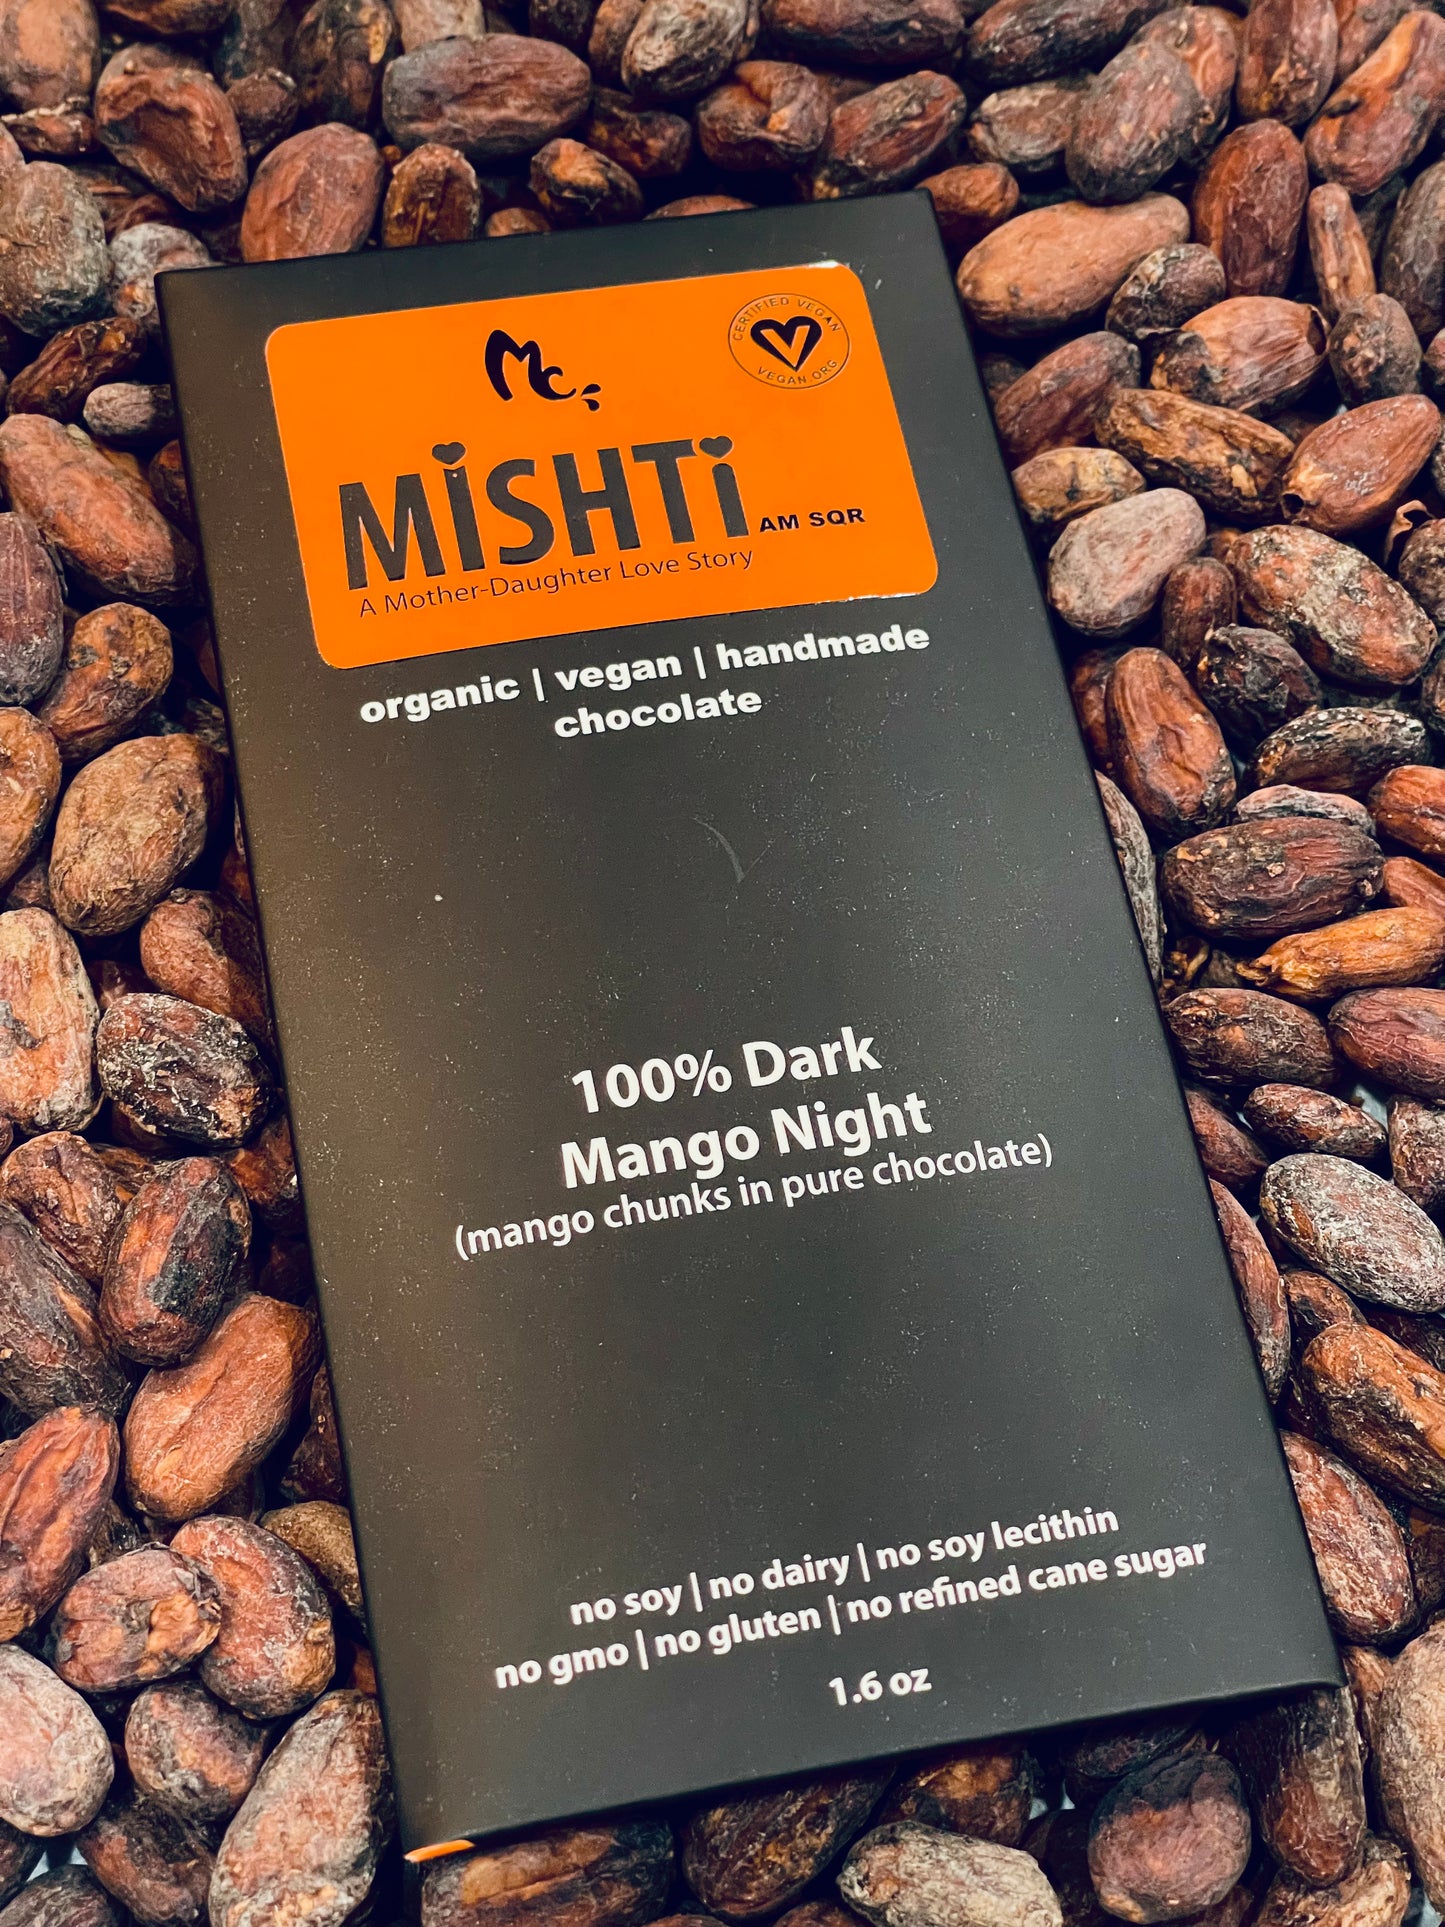 Darkest Mango Night - 100% chocolate with dried mango chunks - no sweeteners